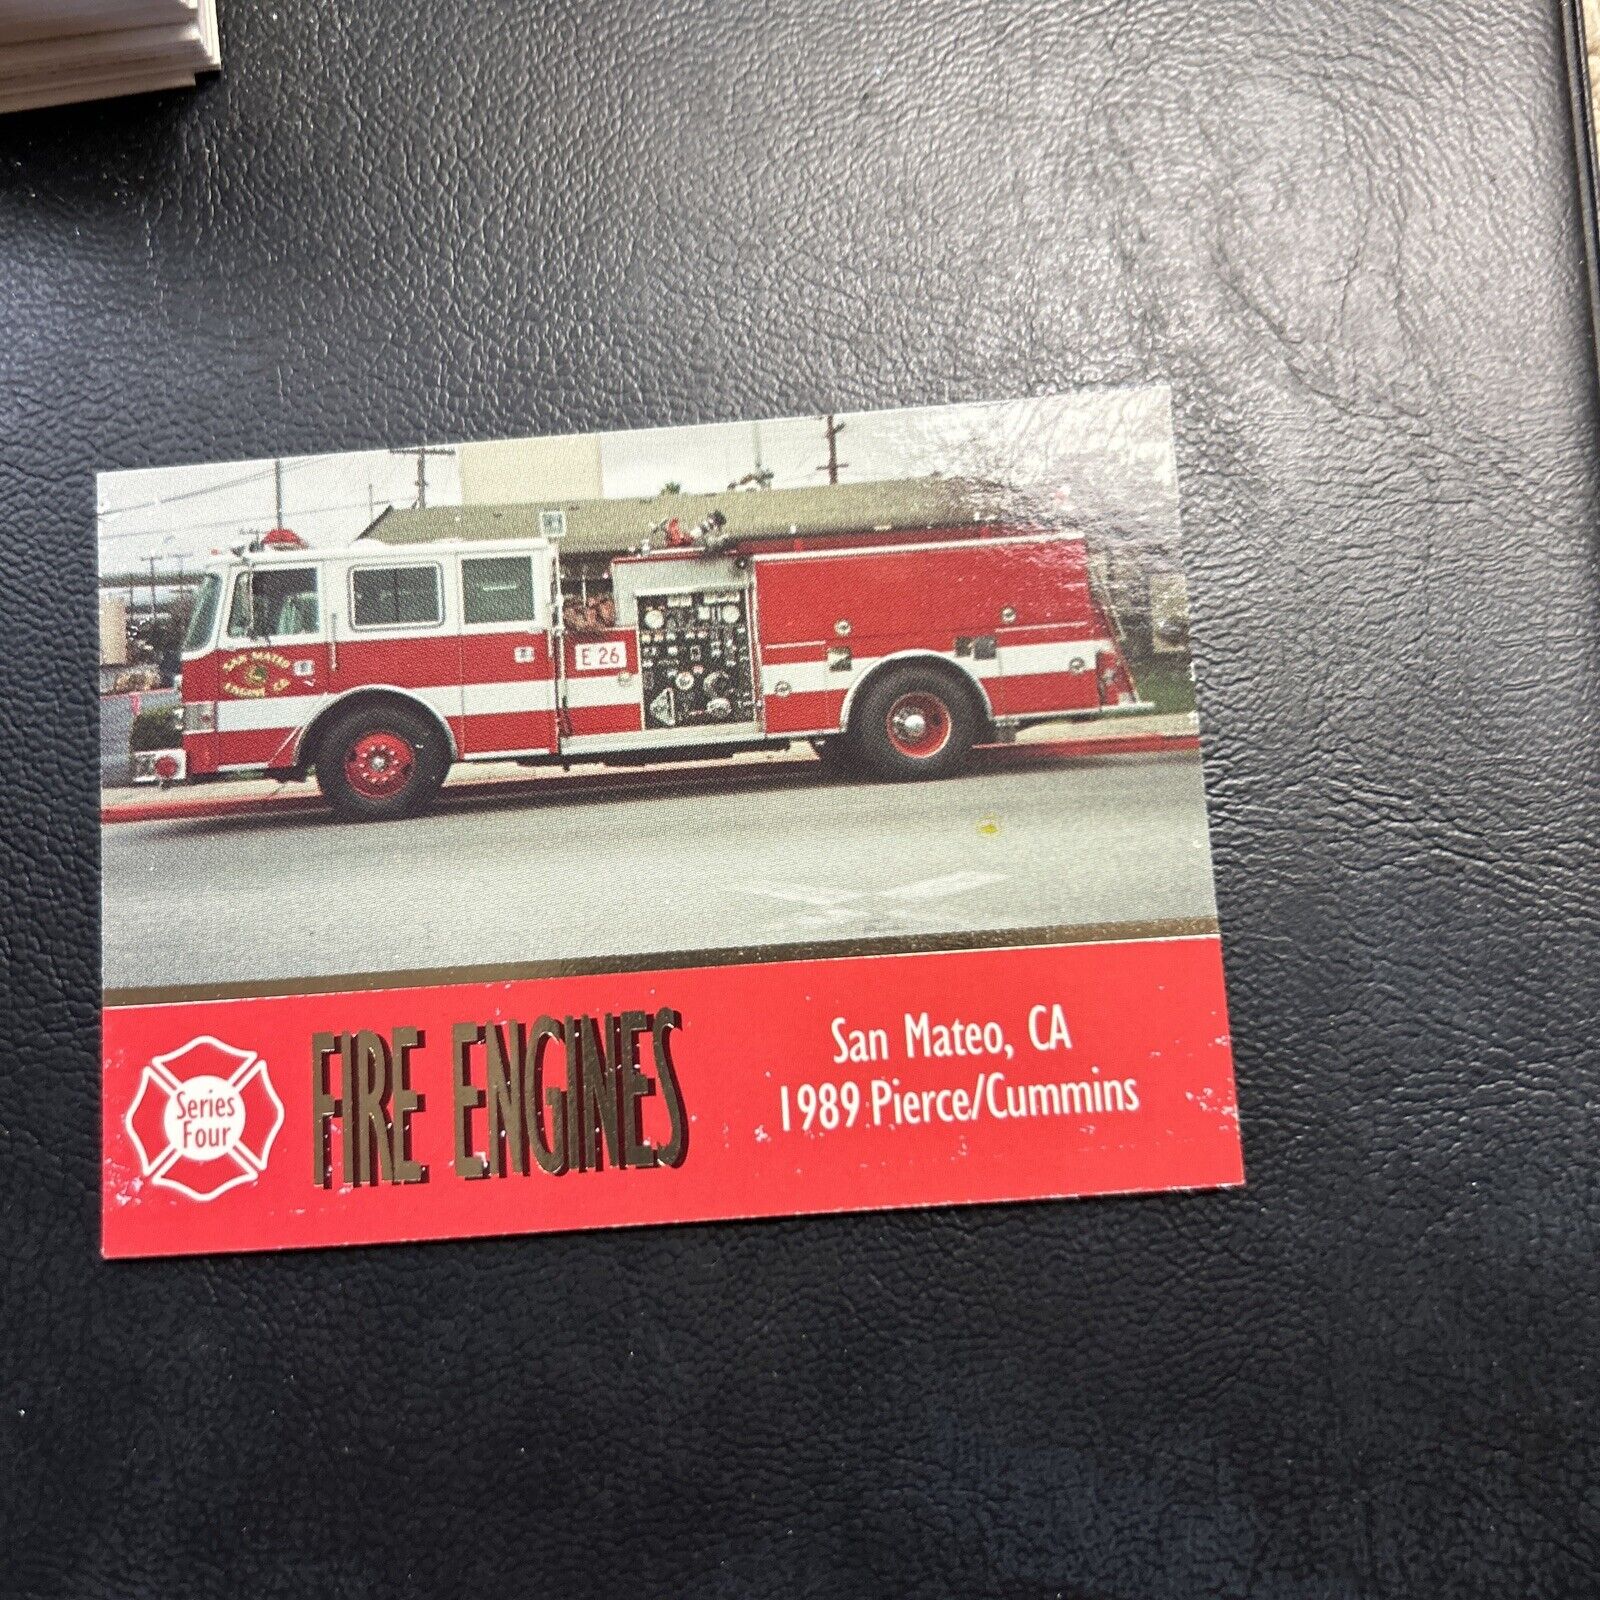 Jb29 Fire Engines Bon Air Series 4 Four 1994 #391 Pierce Cummins 1989